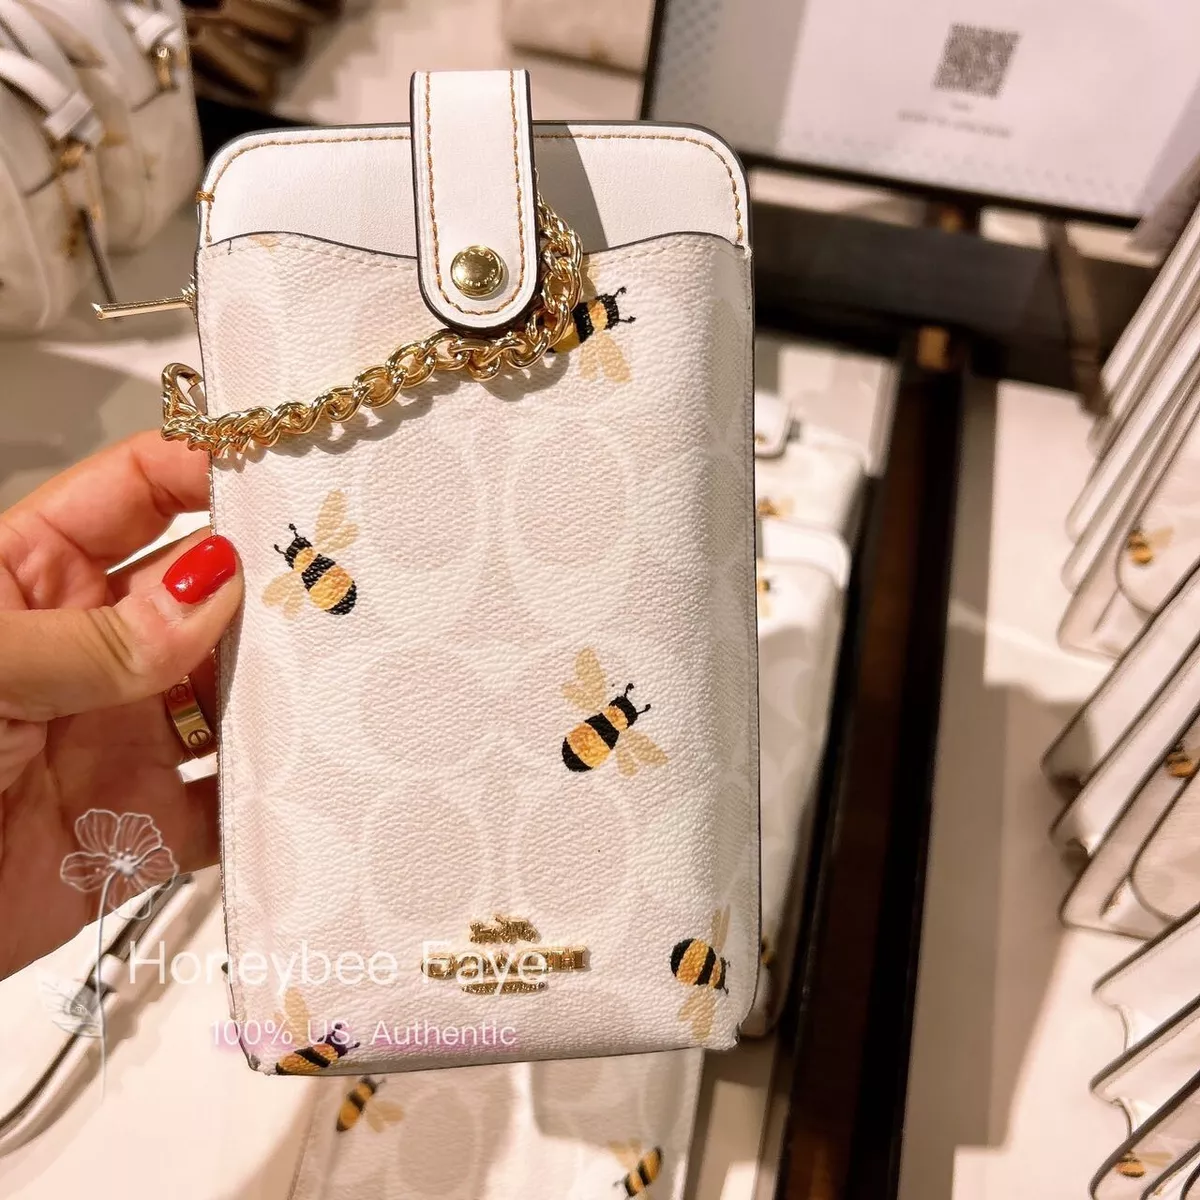 Authentic Luxury Bags - Women's Handbags - San Jose, California